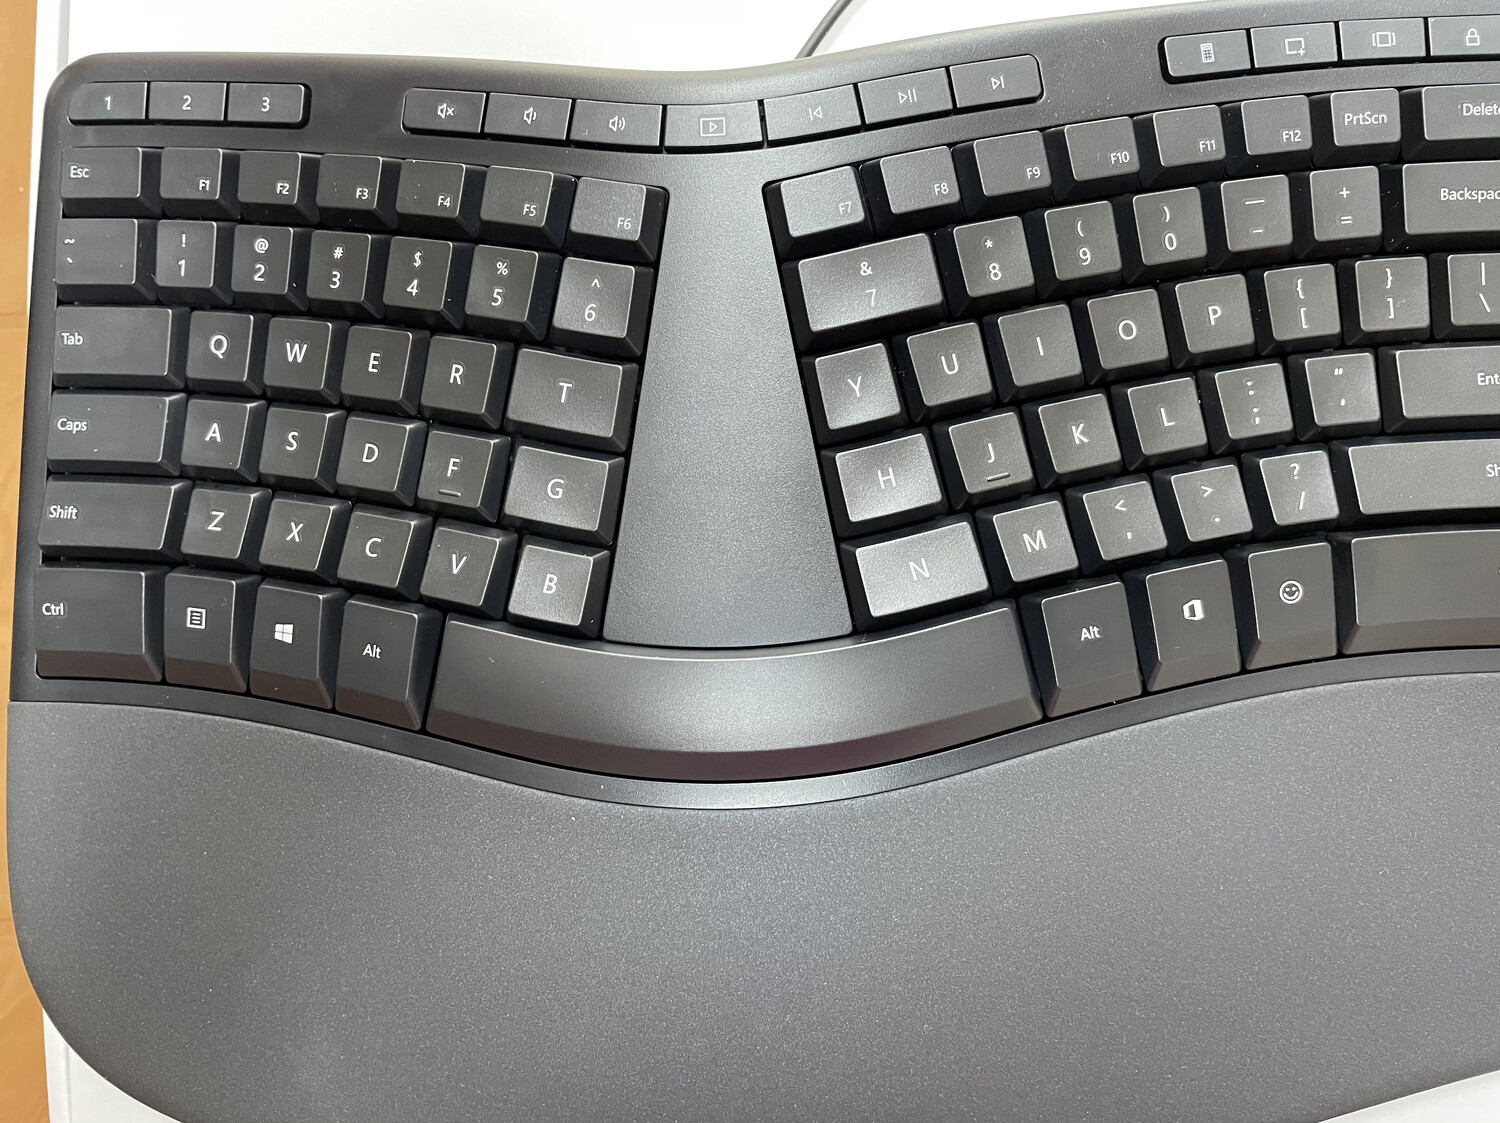 Microsoft Ergonomic Keyboard - split keys, the raised middle column and the large wrist pad